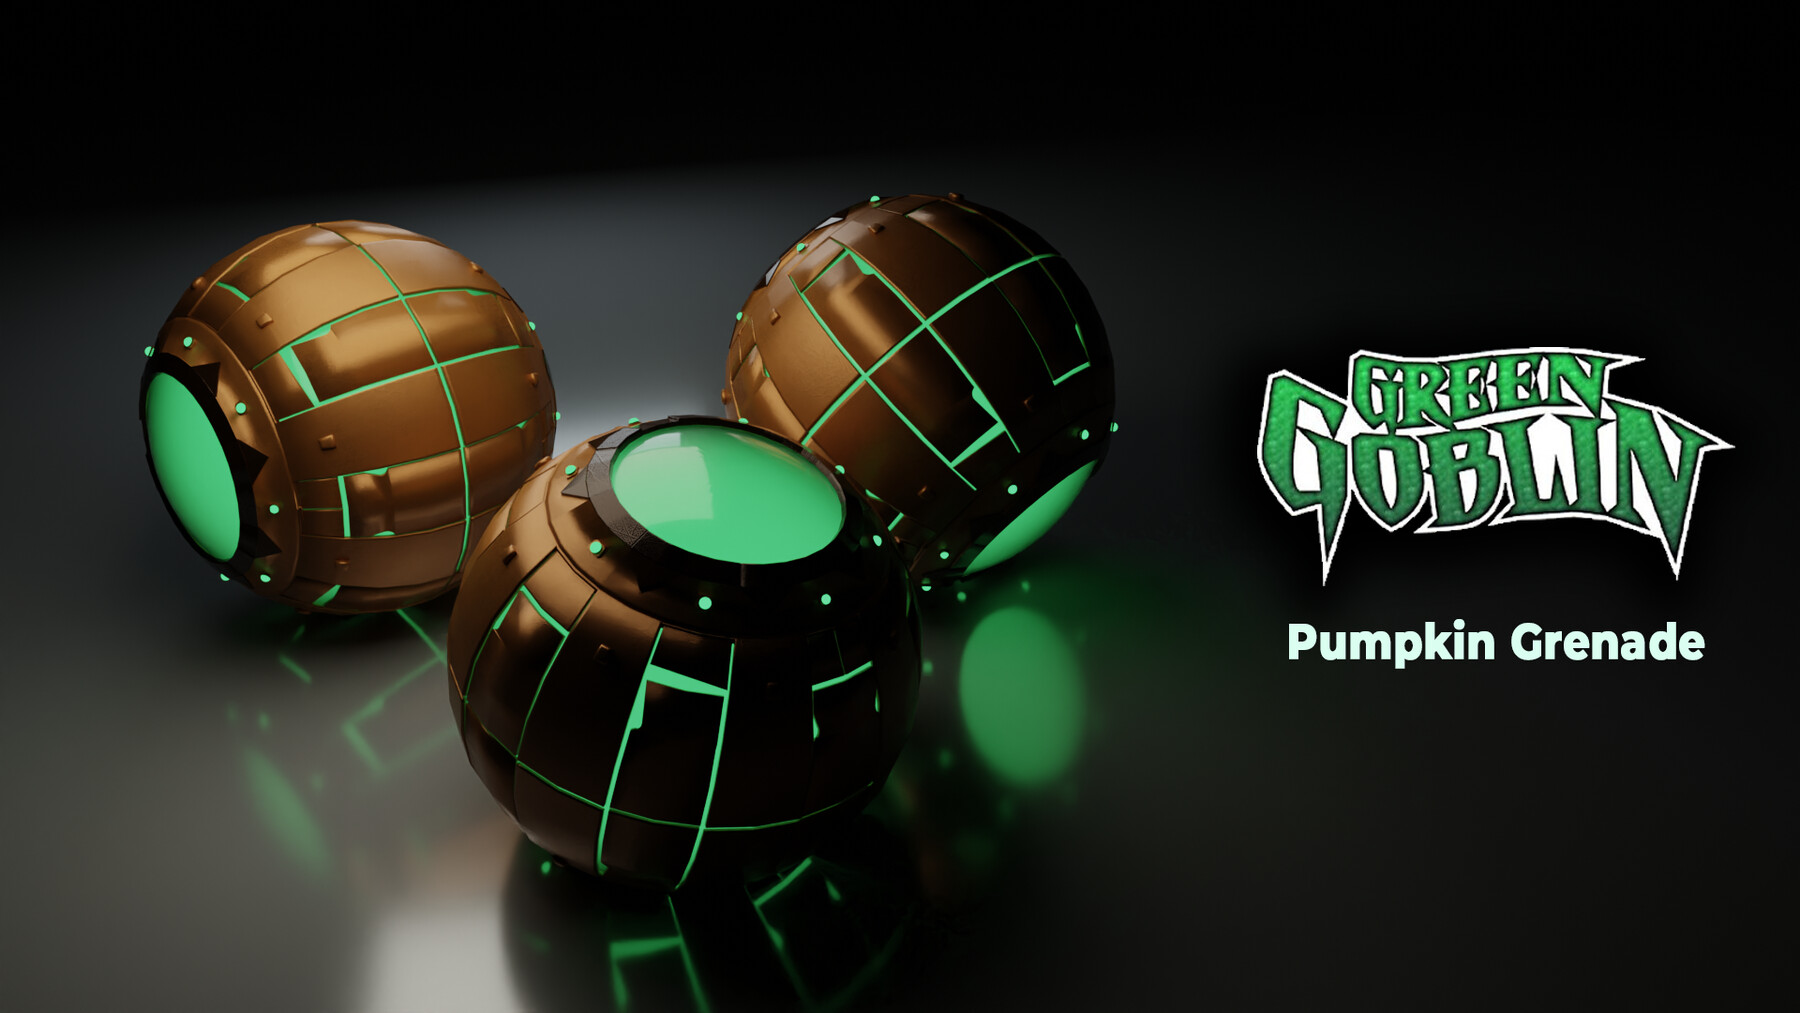 green goblin pumpkin bomb